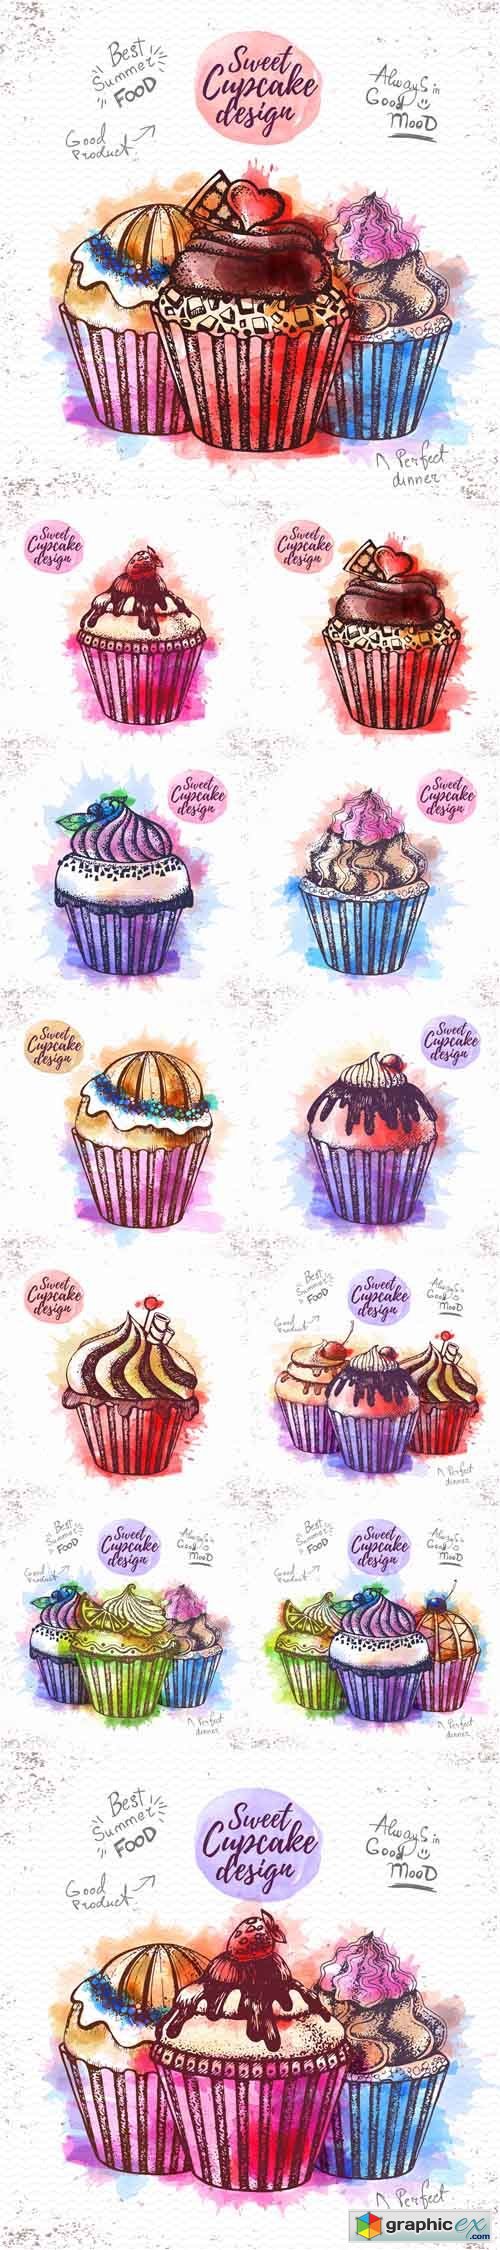 Watercolor Sweet Cupcake Illustarations